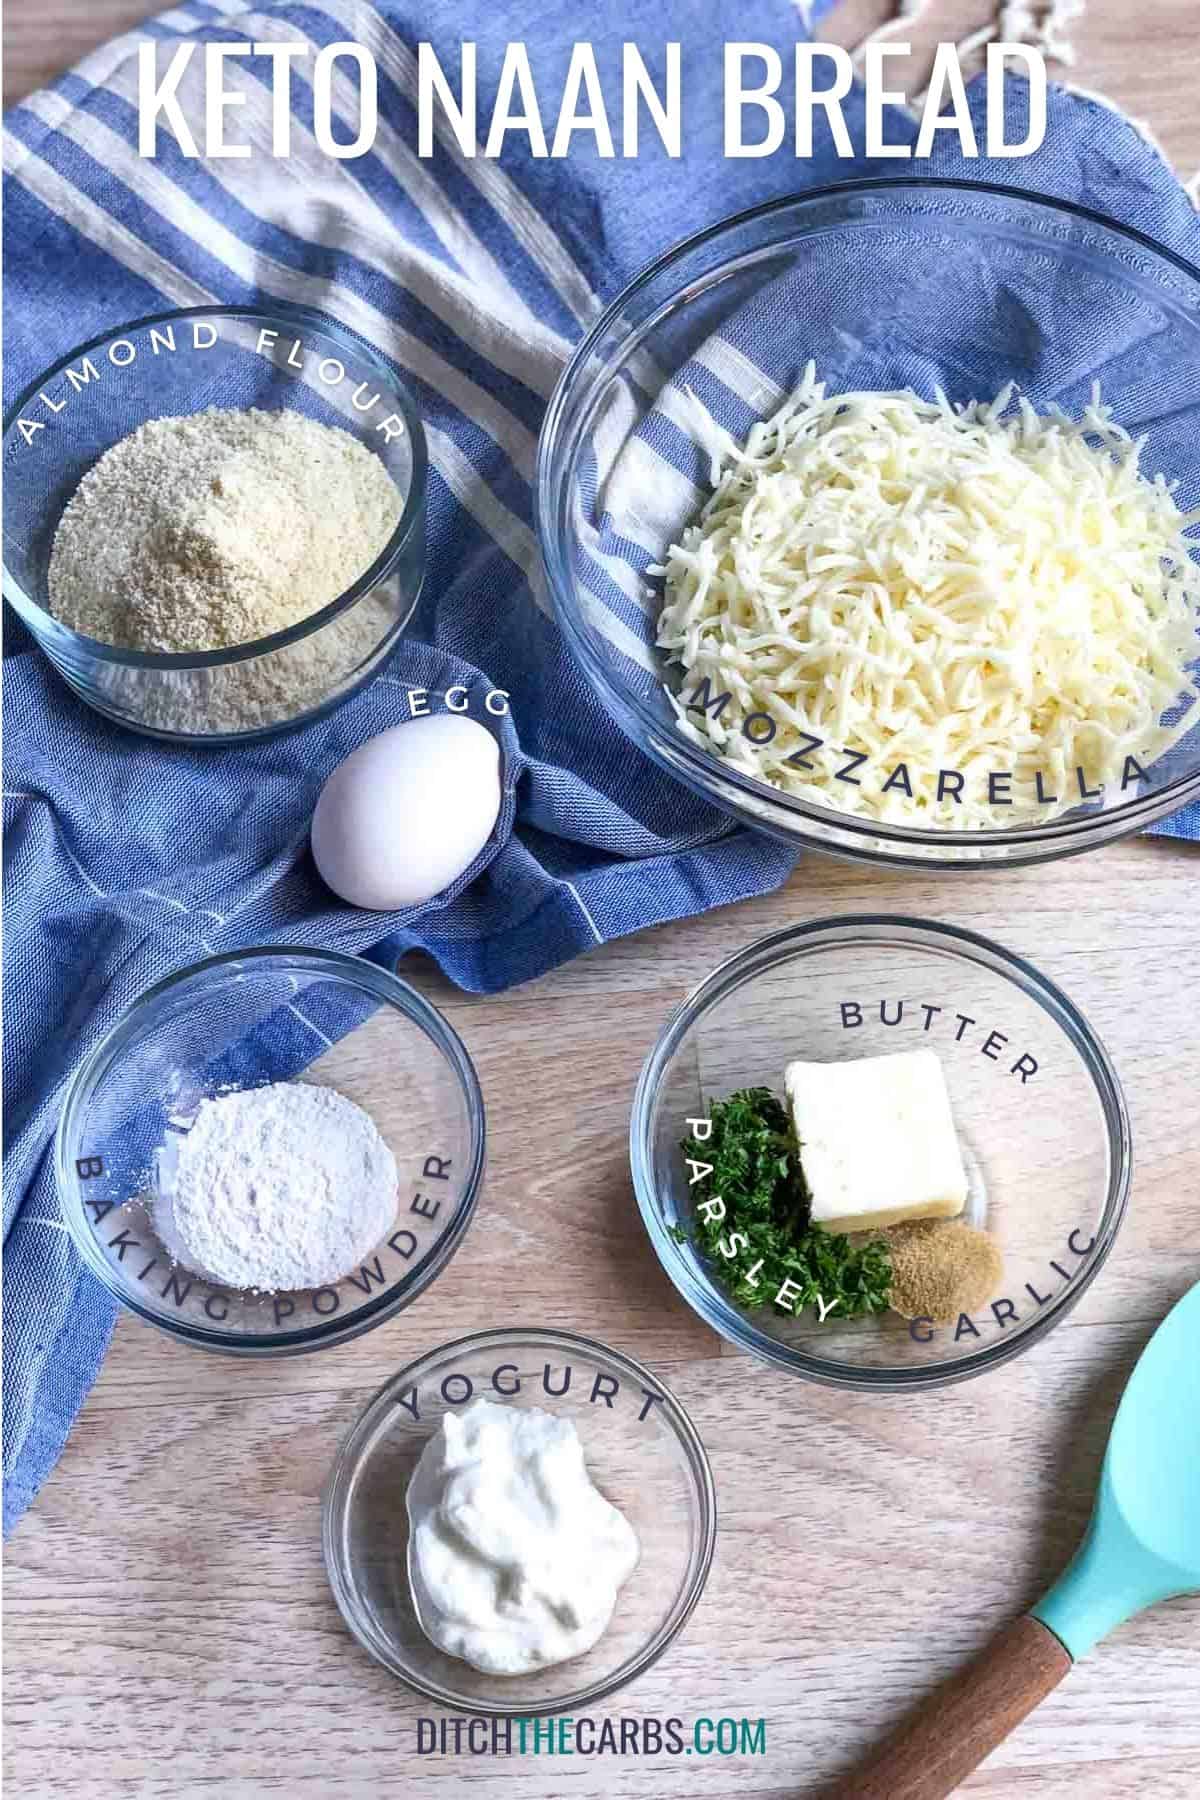 Ingredients needed for keto naan-almond flour, mozzarella cheese, eggs, butter, parsley, garlic, yogurt and baking powder.